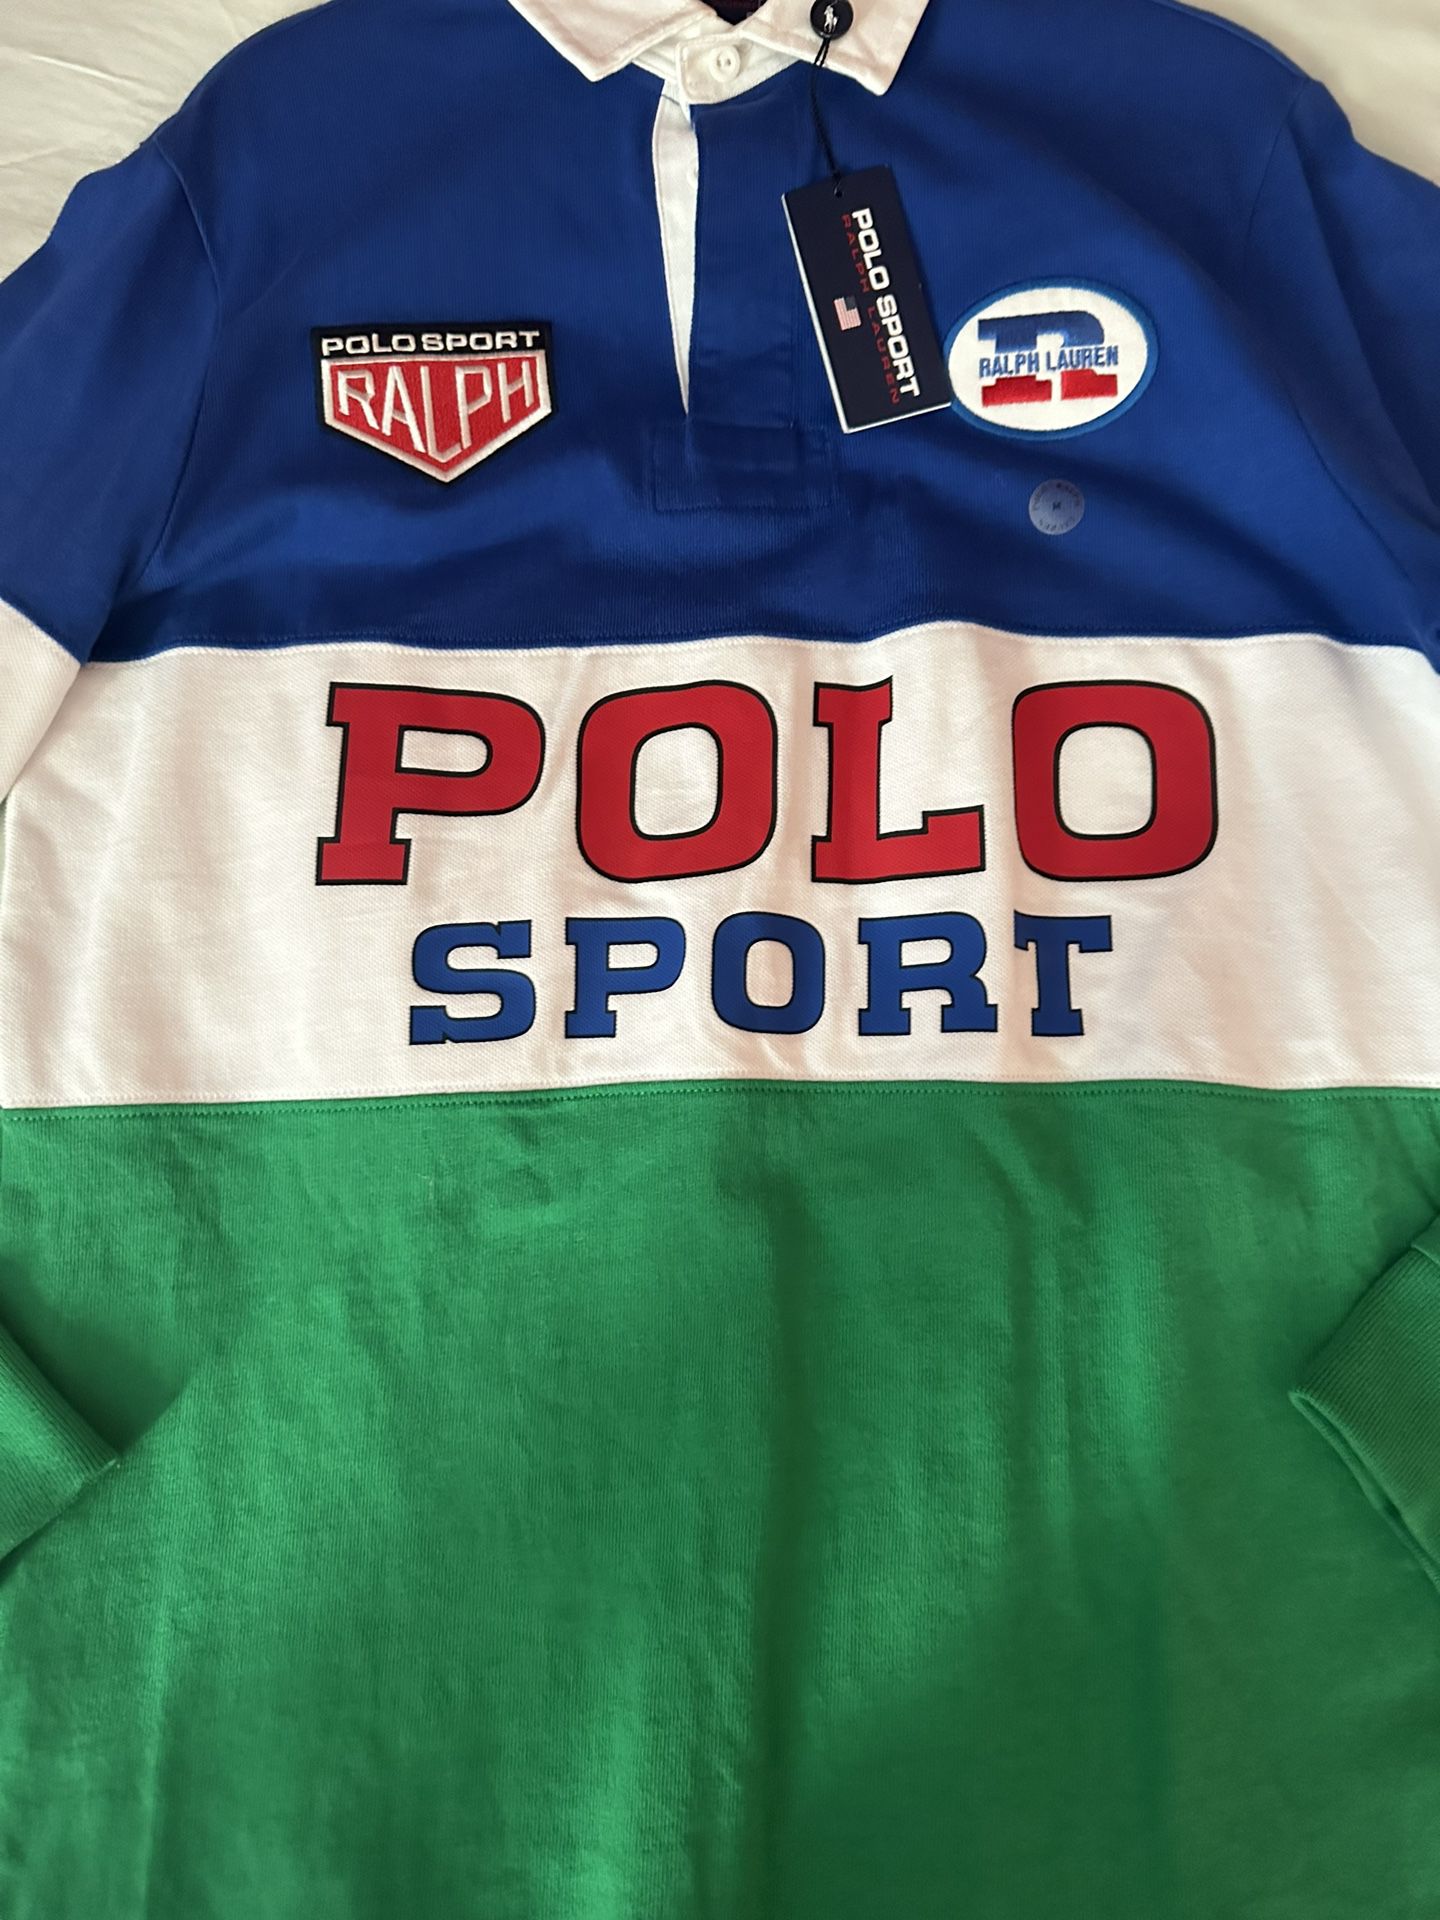 Polo Sport Ralph Lauren Racing Team Long Sleeve Rugby Polo Shirt Medium $198